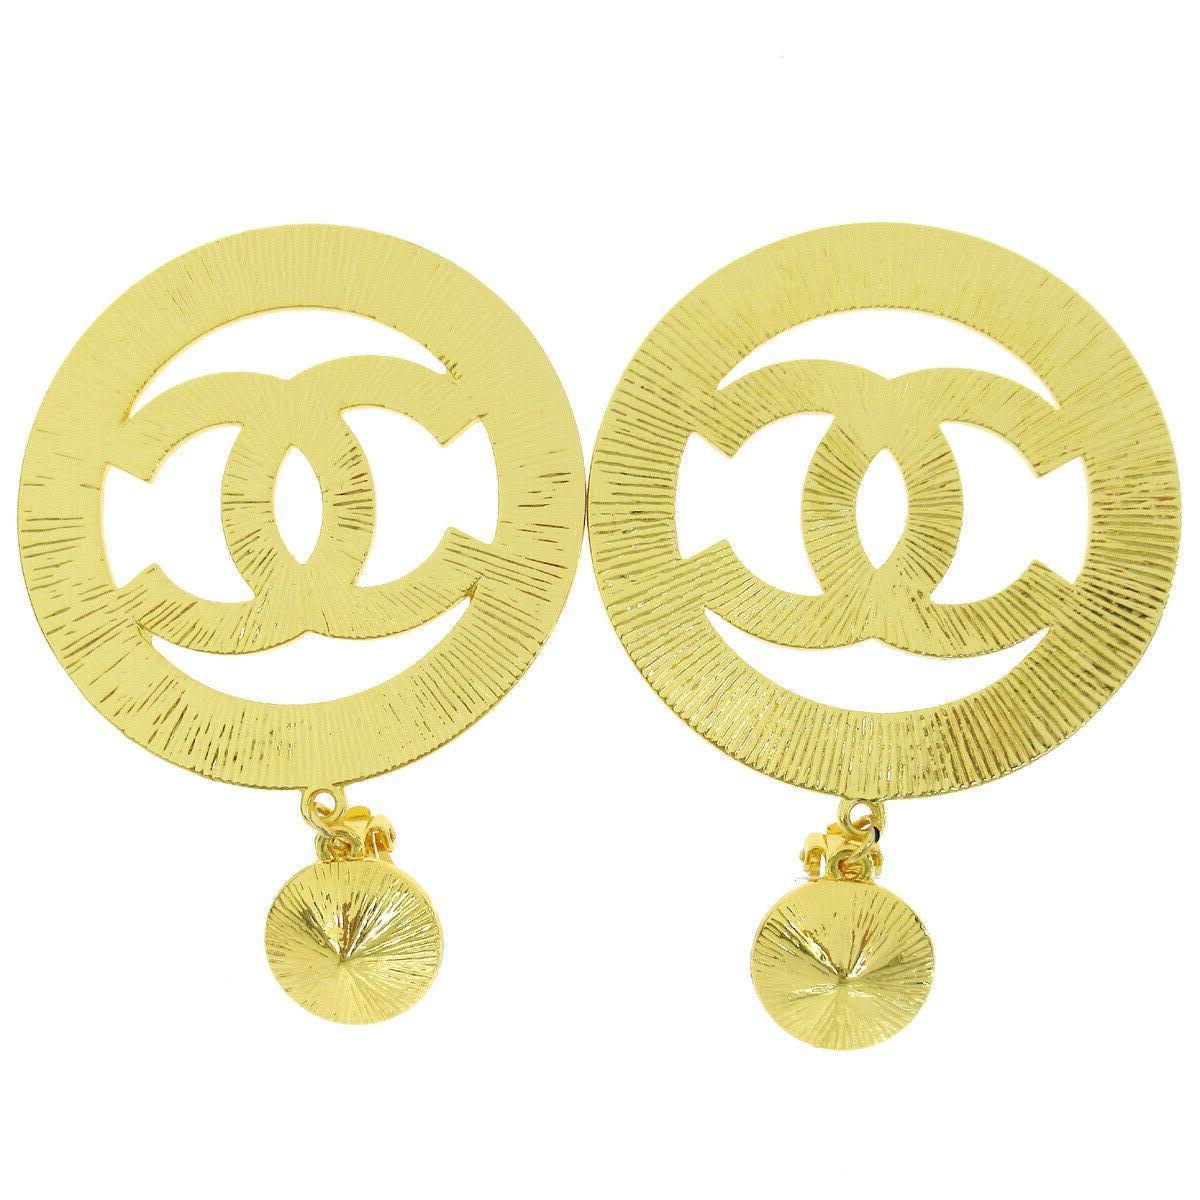 large gold chanel earrings